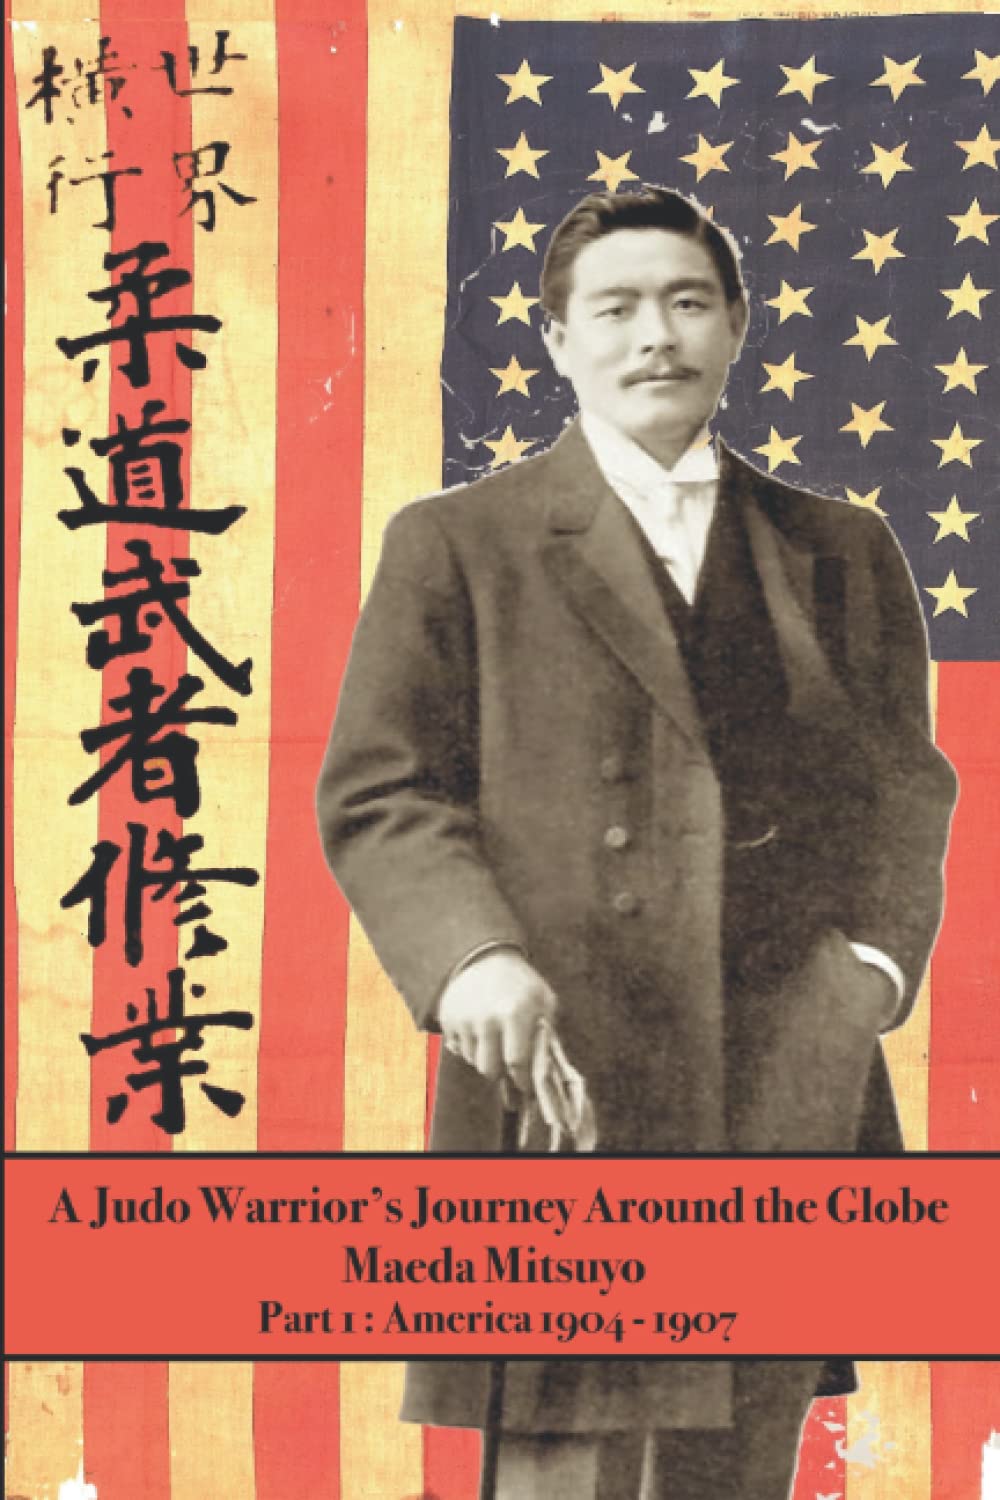 A Judo Warrior's Journey Around the Globe: America 1904-1907 by Mitsuyo Maeda